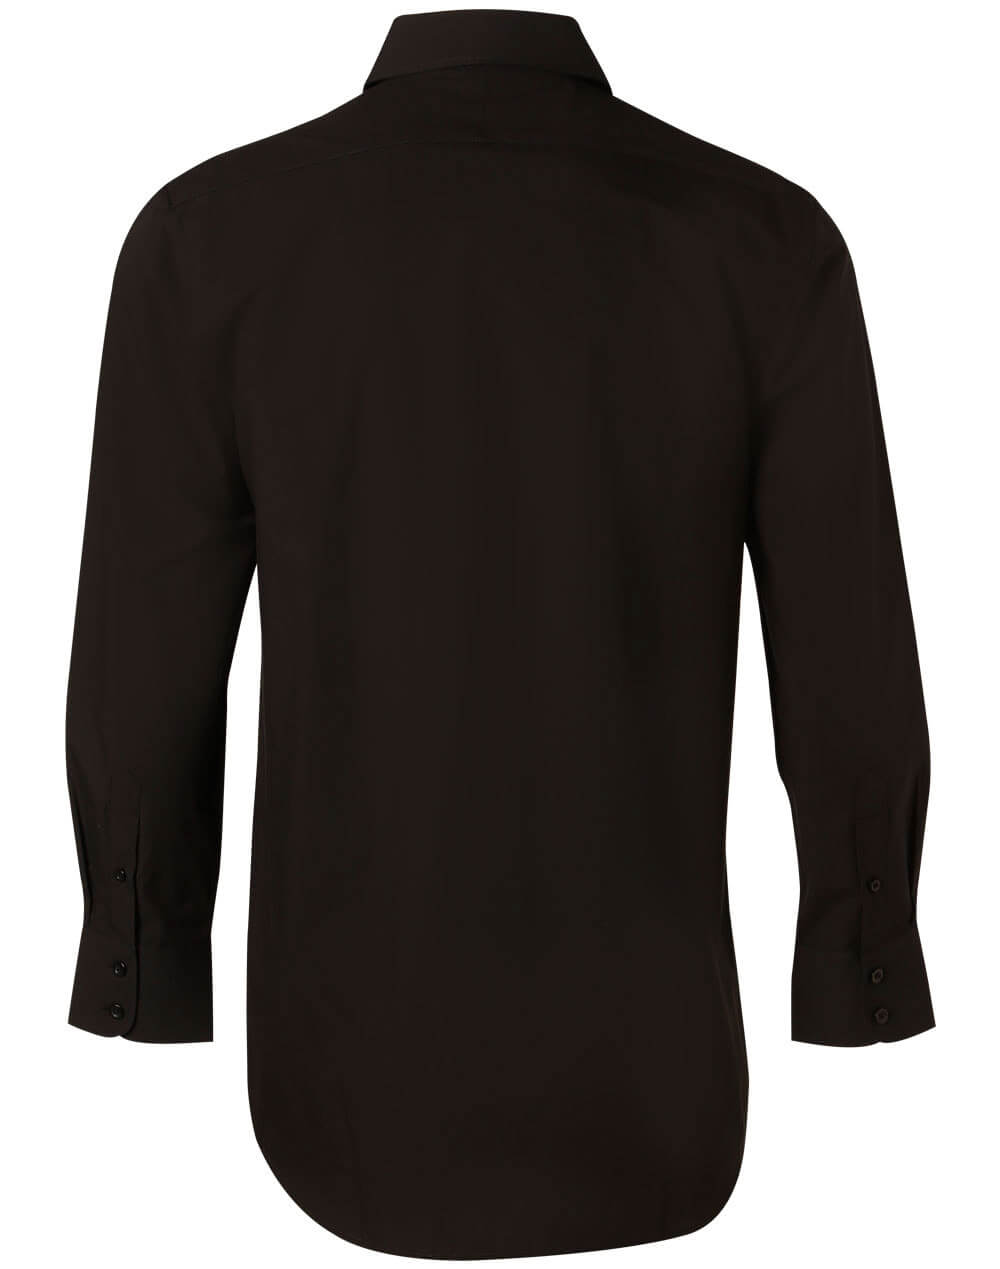 M7020L Men's Cotton/Poly Stretch Long Sheeve Shirt